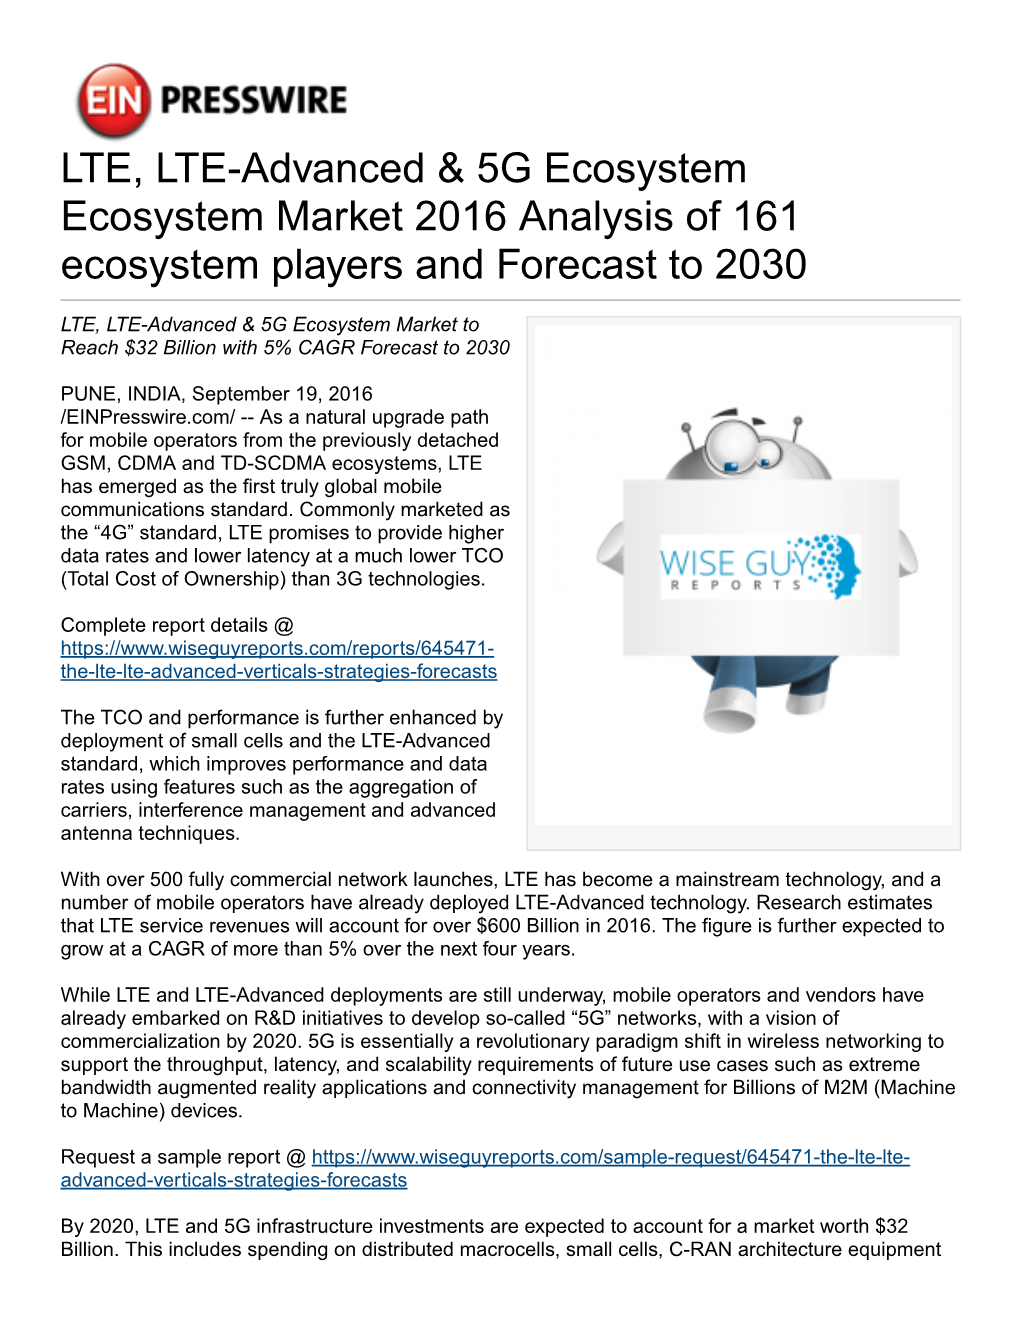 LTE, LTE-Advanced & 5G Ecosystem Ecosystem Market 2016 Analysis Of